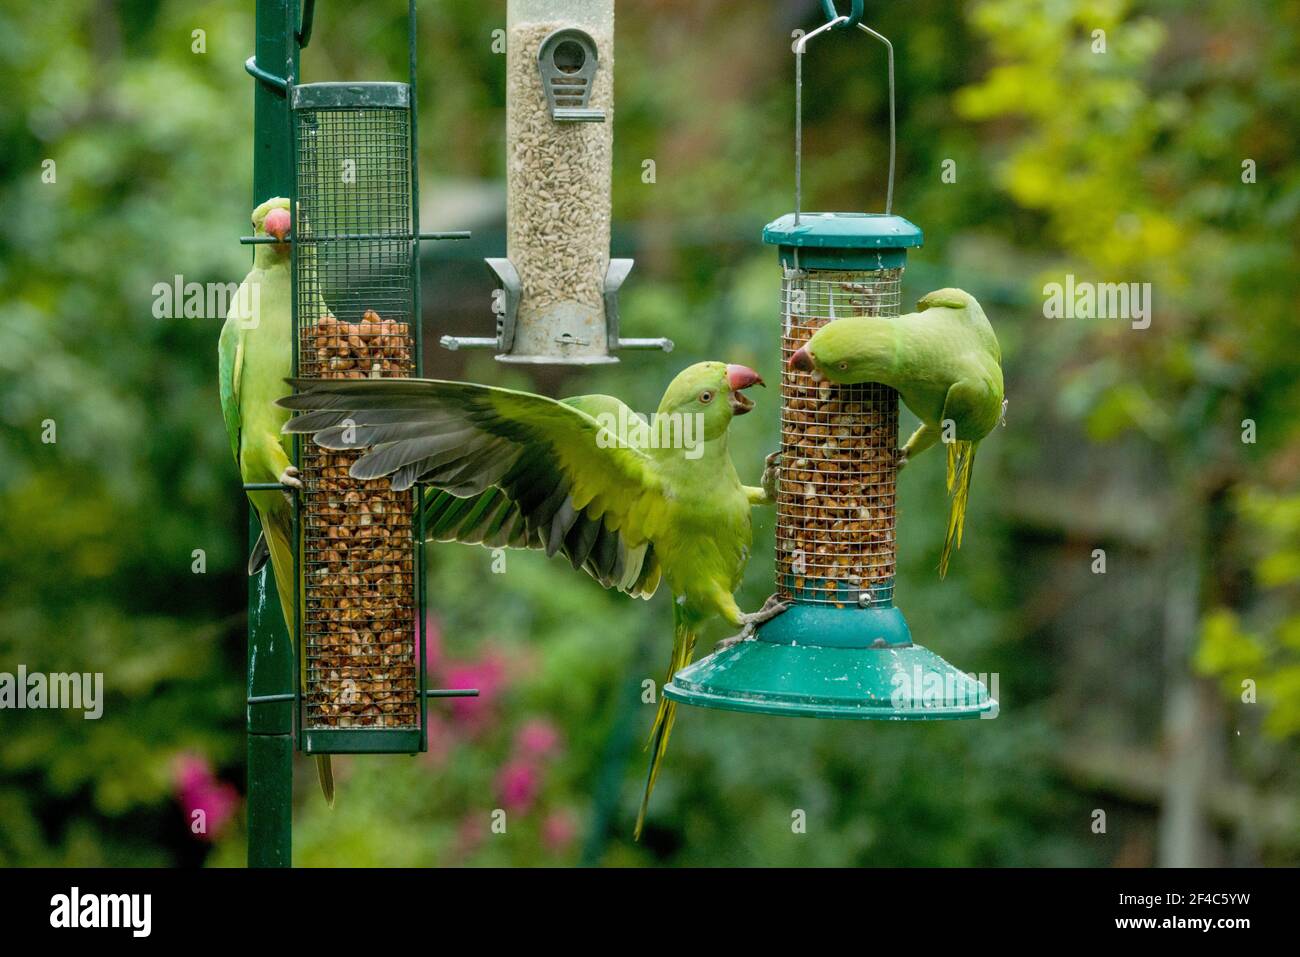 Rose-ringed or Ring-necked parakeets [Psittacula krameri] squabbling on bird feeders.  London, Uk. Stock Photo